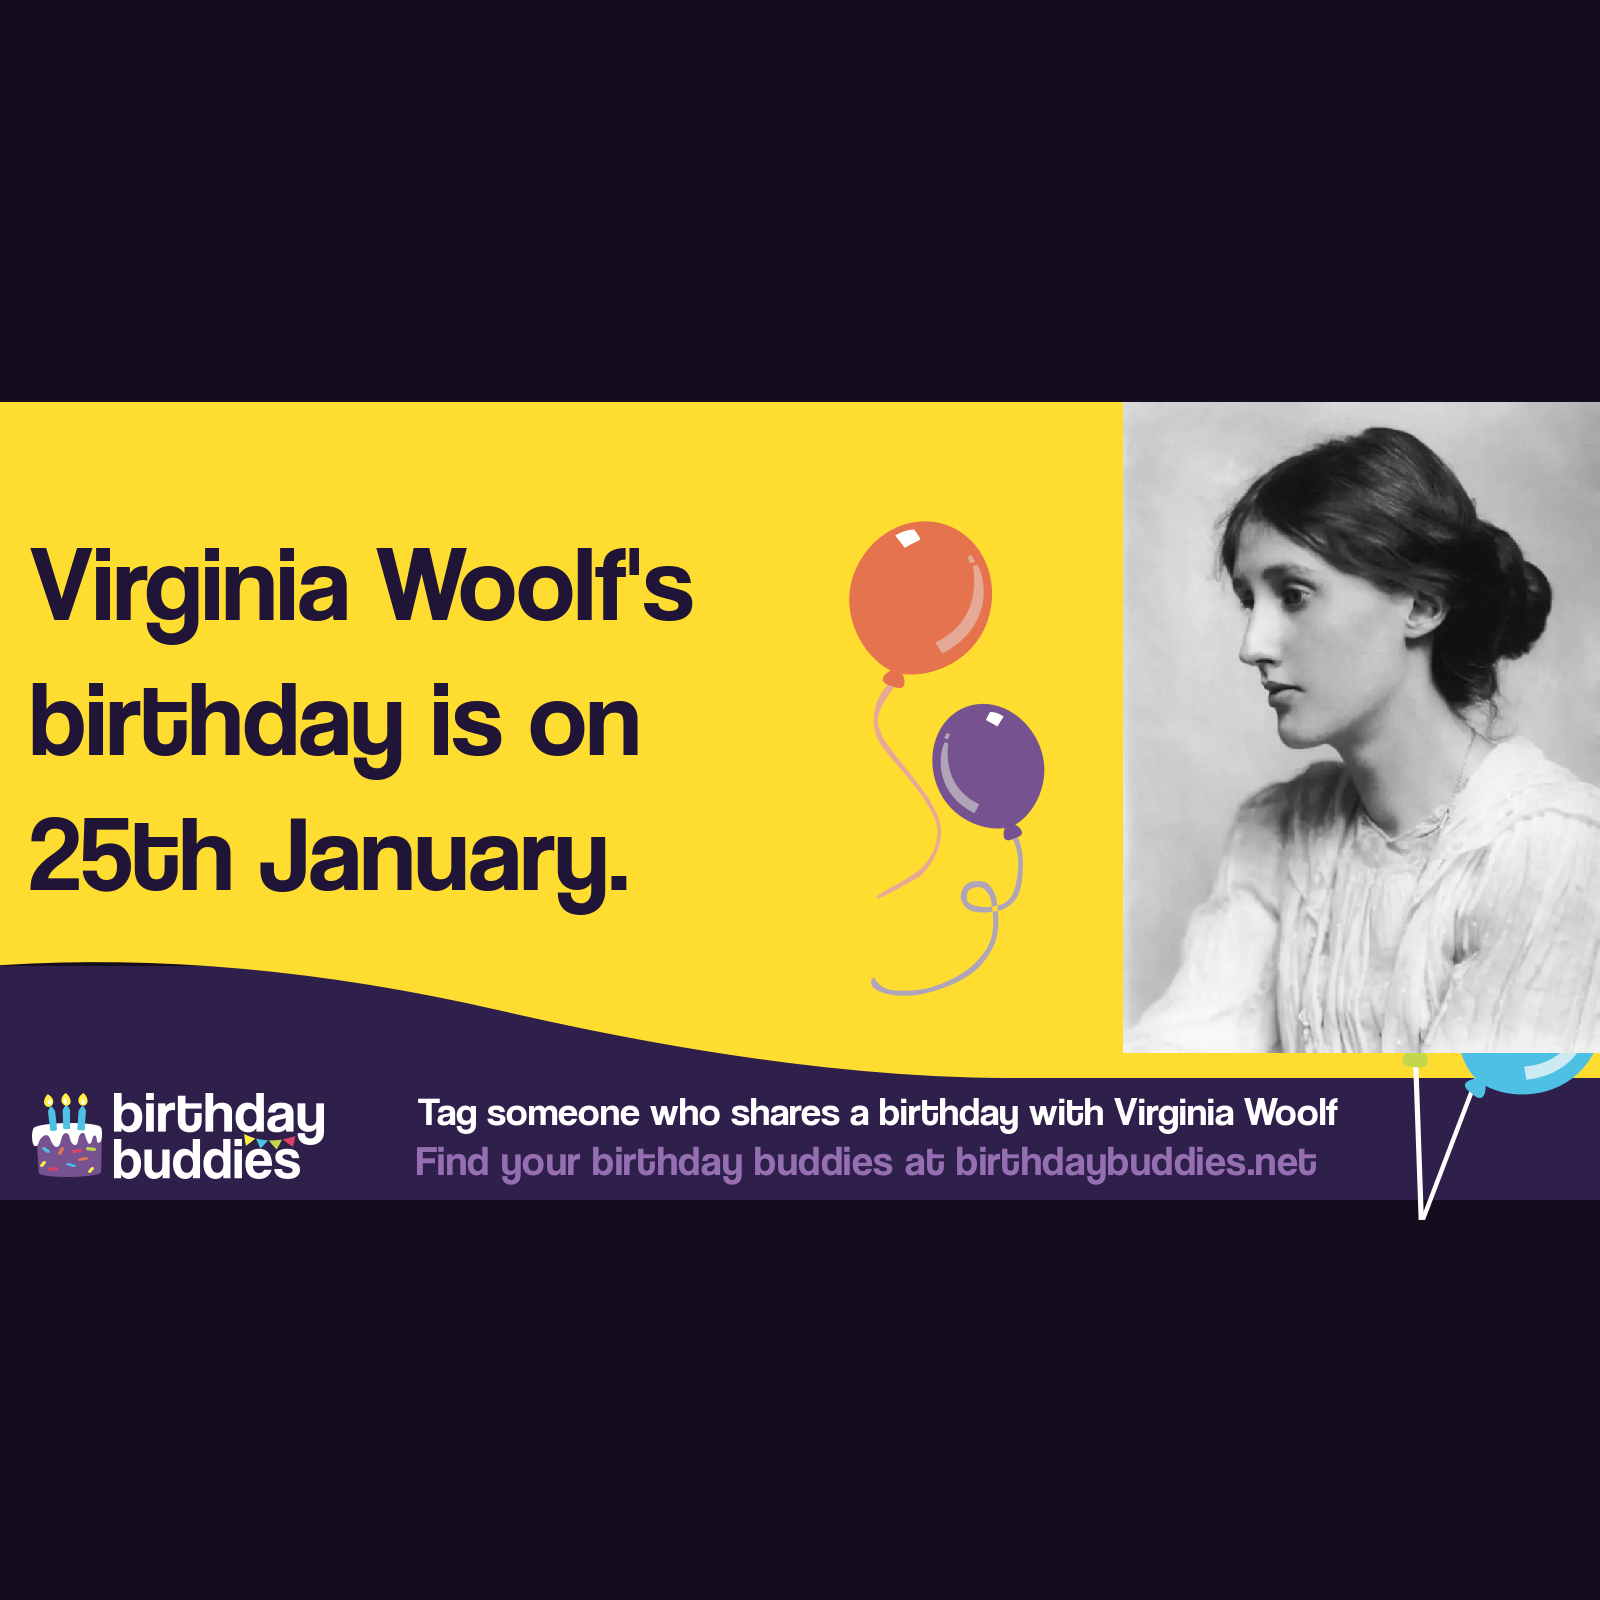 Virginia Woolf's birthday was 25th January 1882